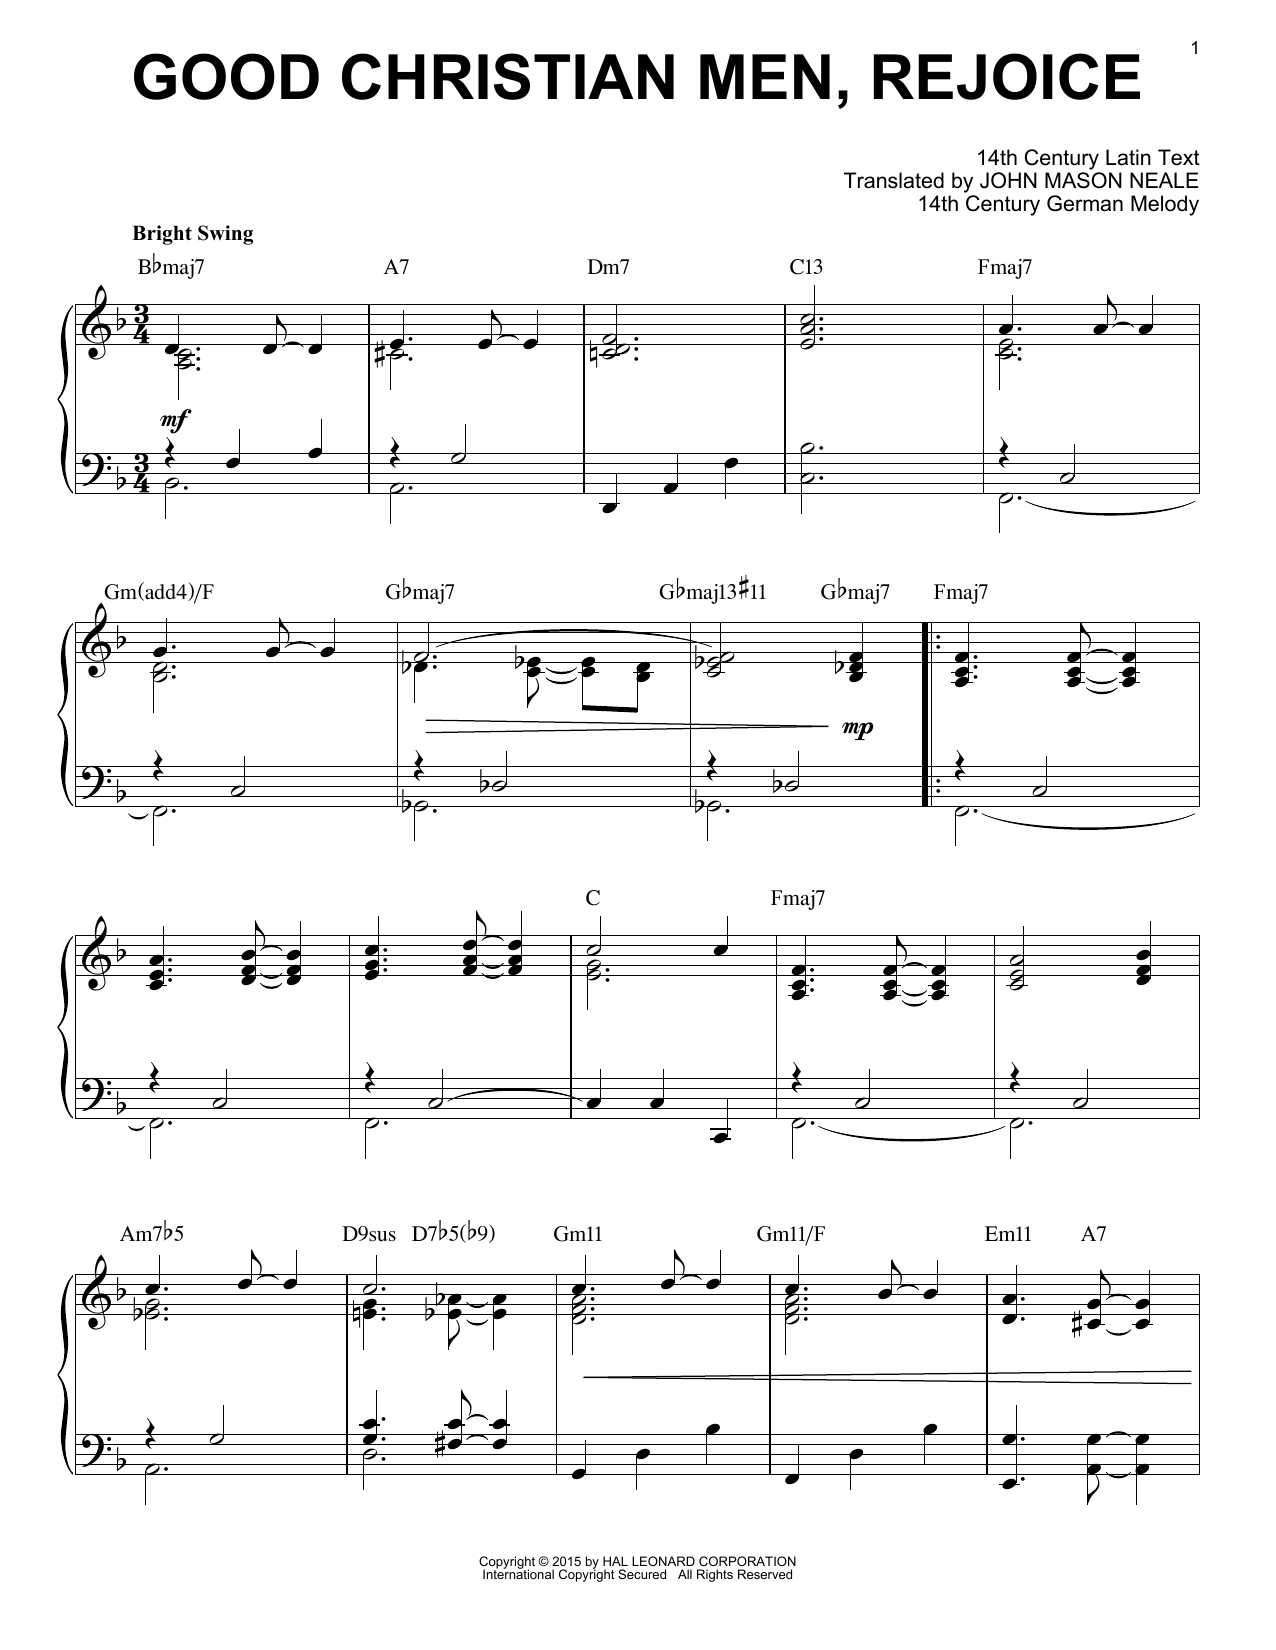 John Mason Neale Good Christian Men, Rejoice [Jazz version] (arr. Brent Edstrom) Sheet Music Notes & Chords for Piano - Download or Print PDF